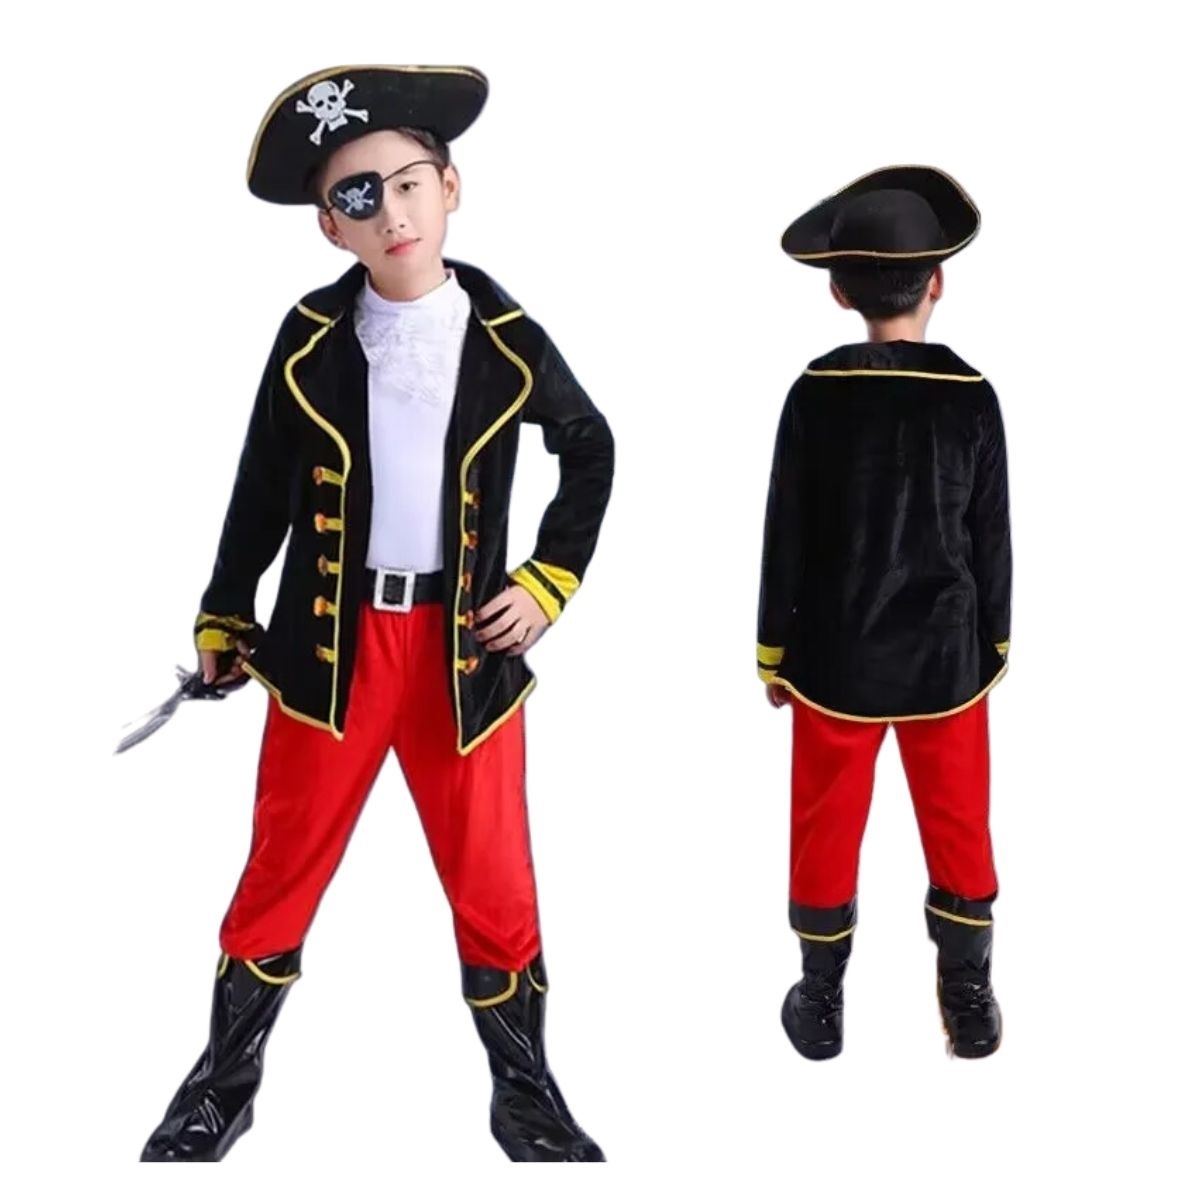 Fantasia Pirata Infantil Menino E Menina - Kit 2 Fantasias